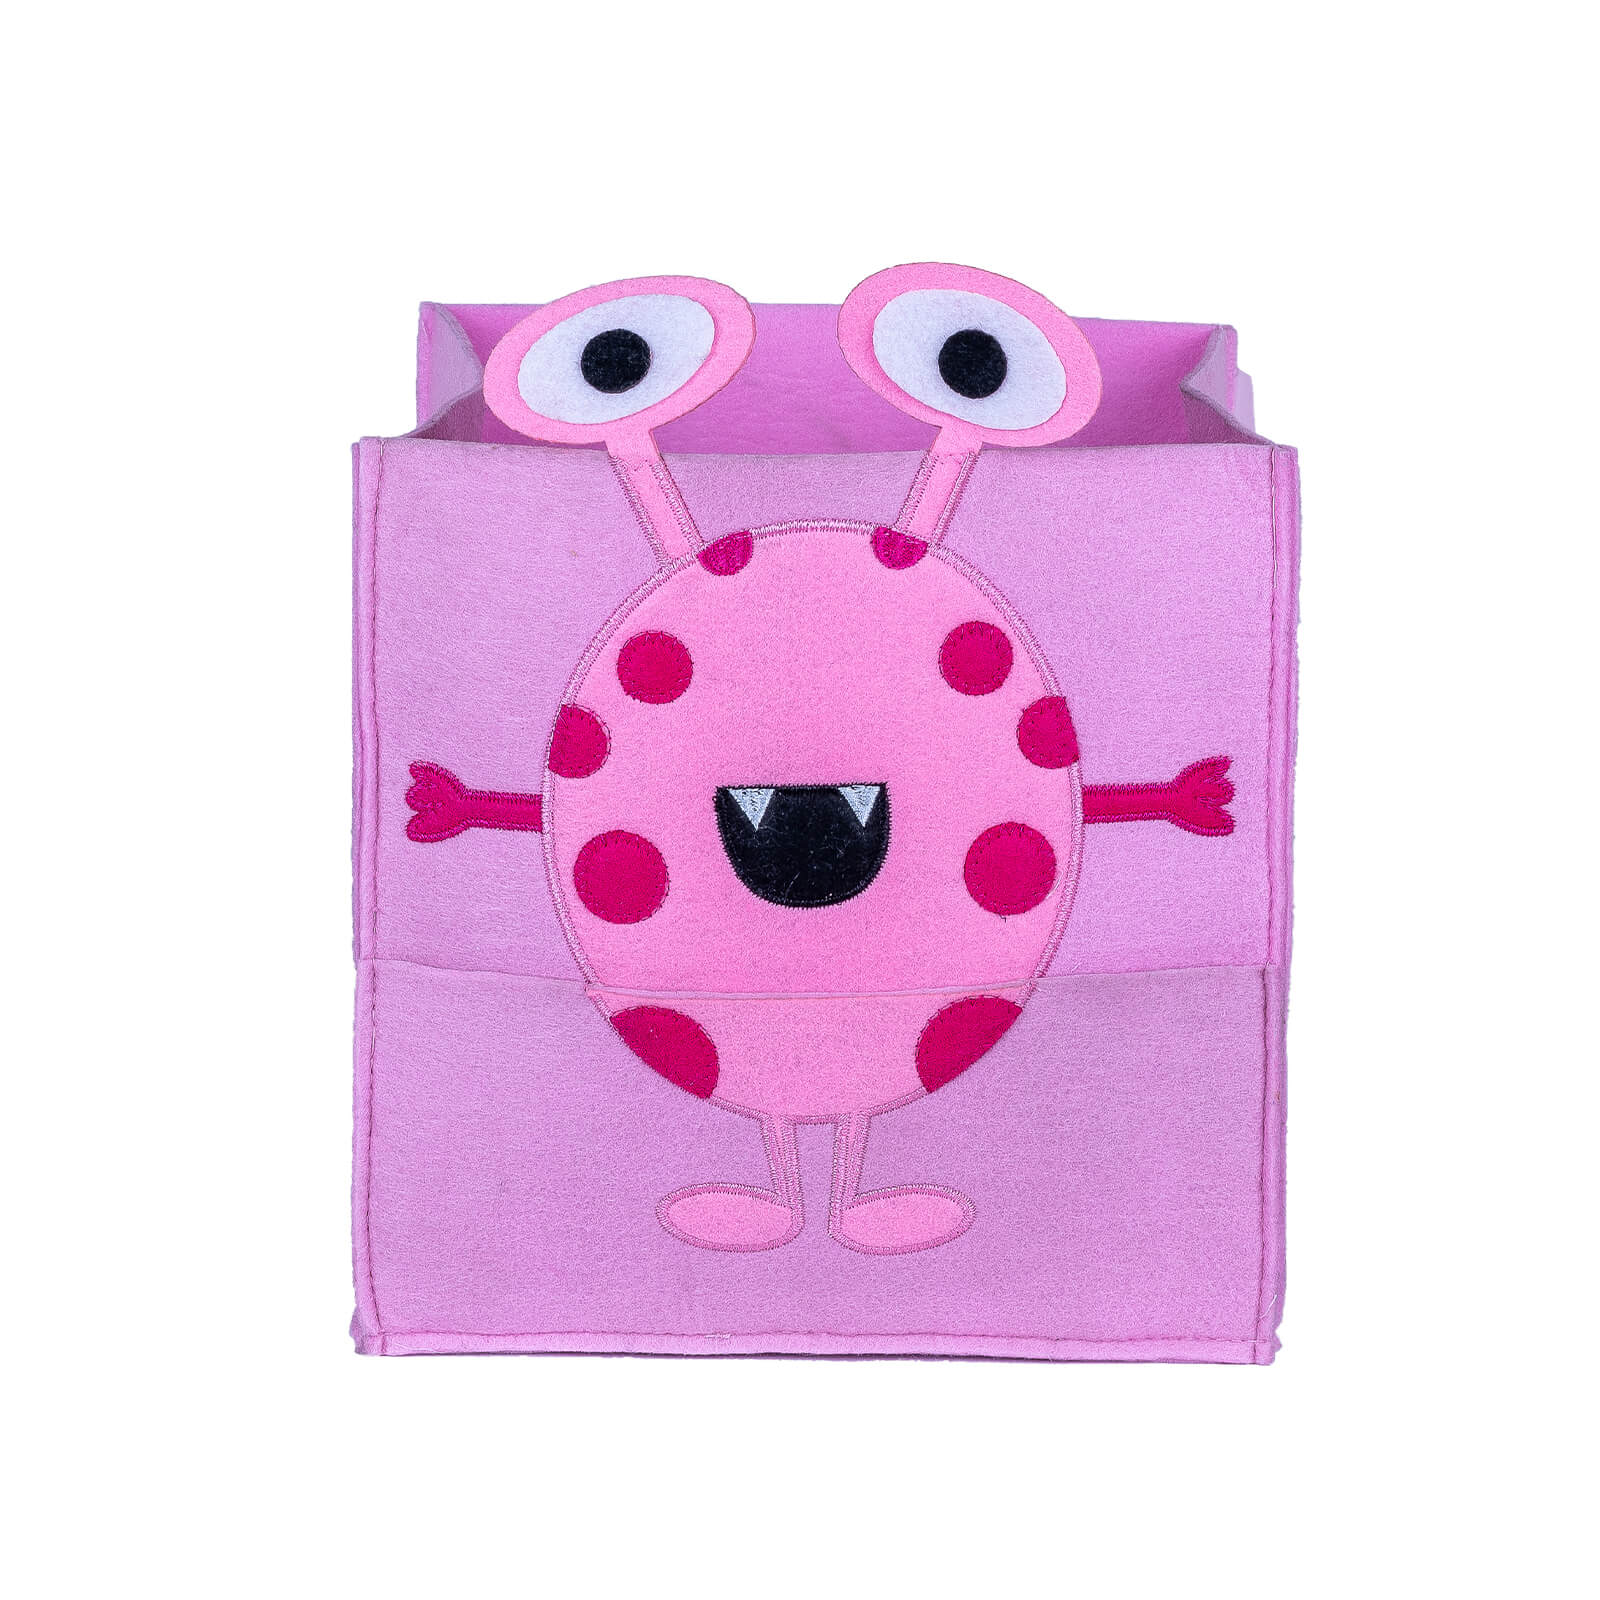 Flexi Storage Kids Compact Fabric Insert - Pink Monster